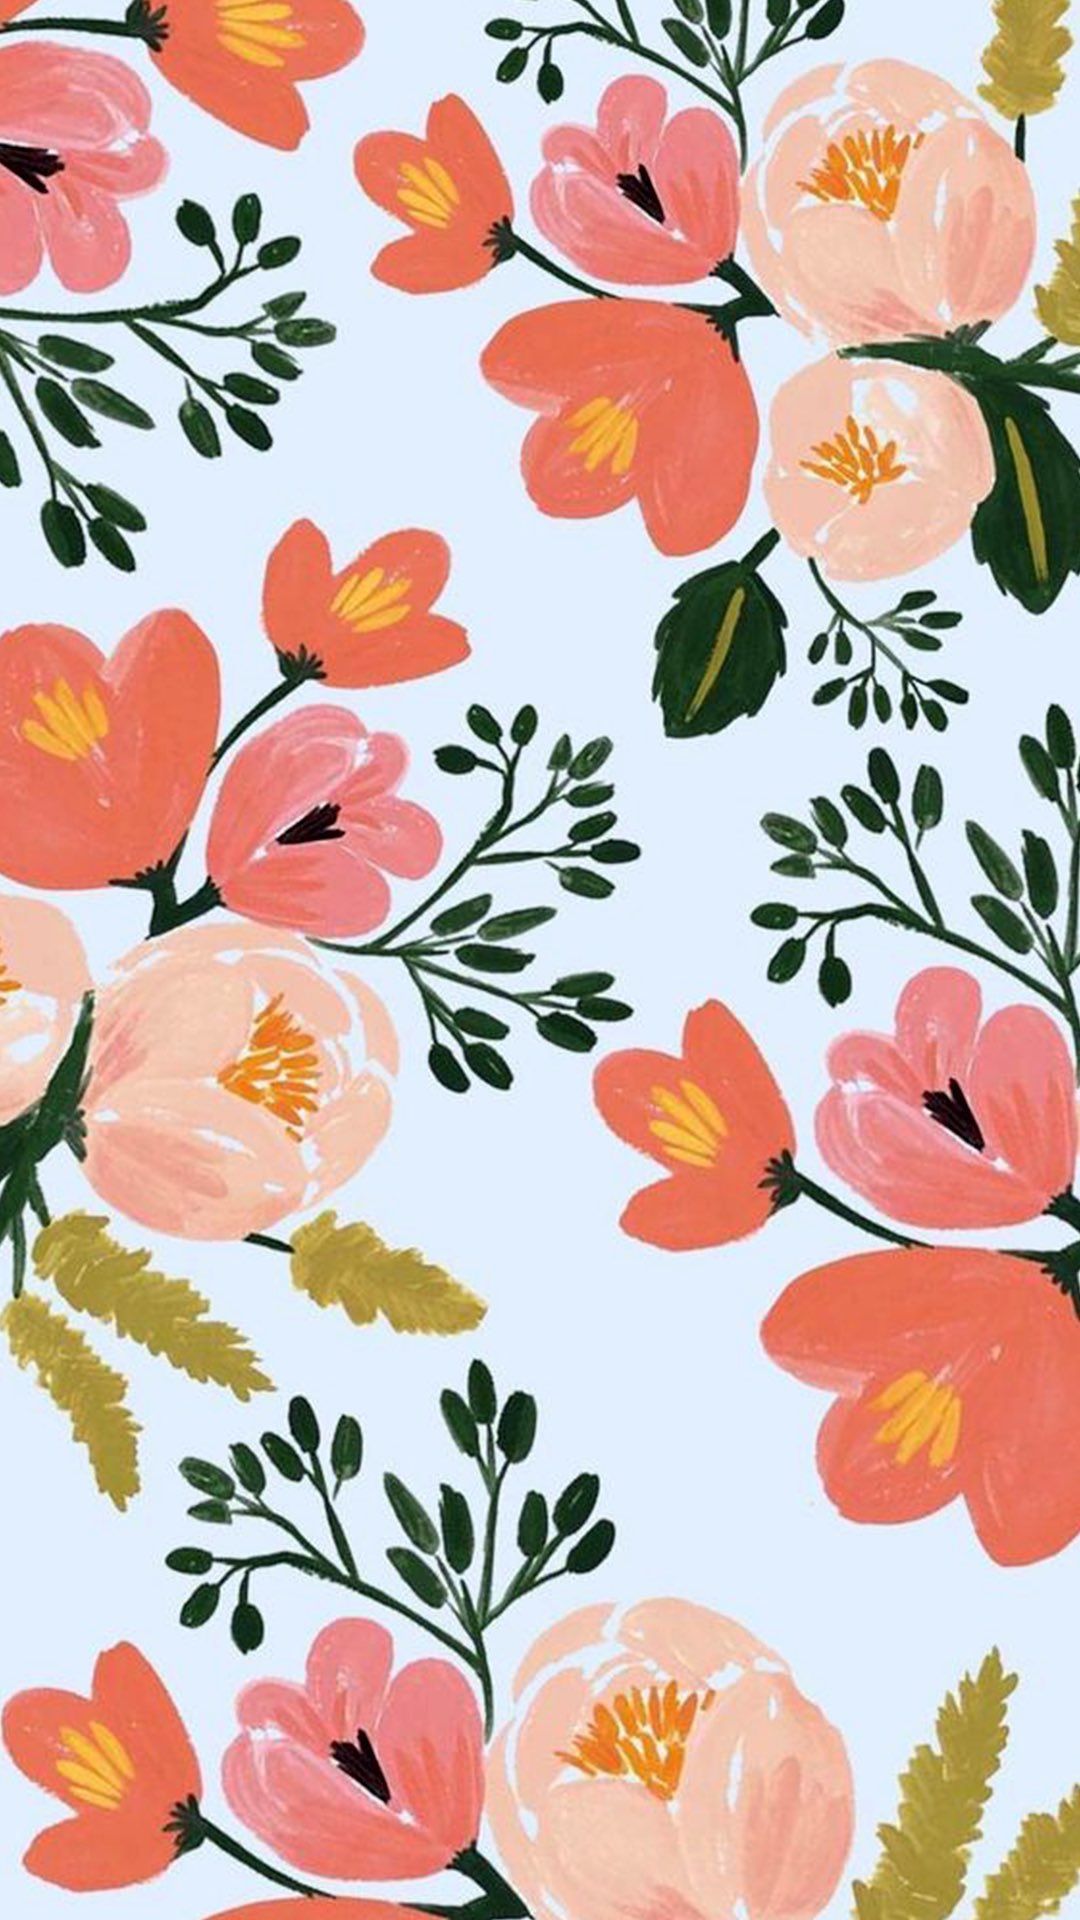 Cute Flower Wallpapers